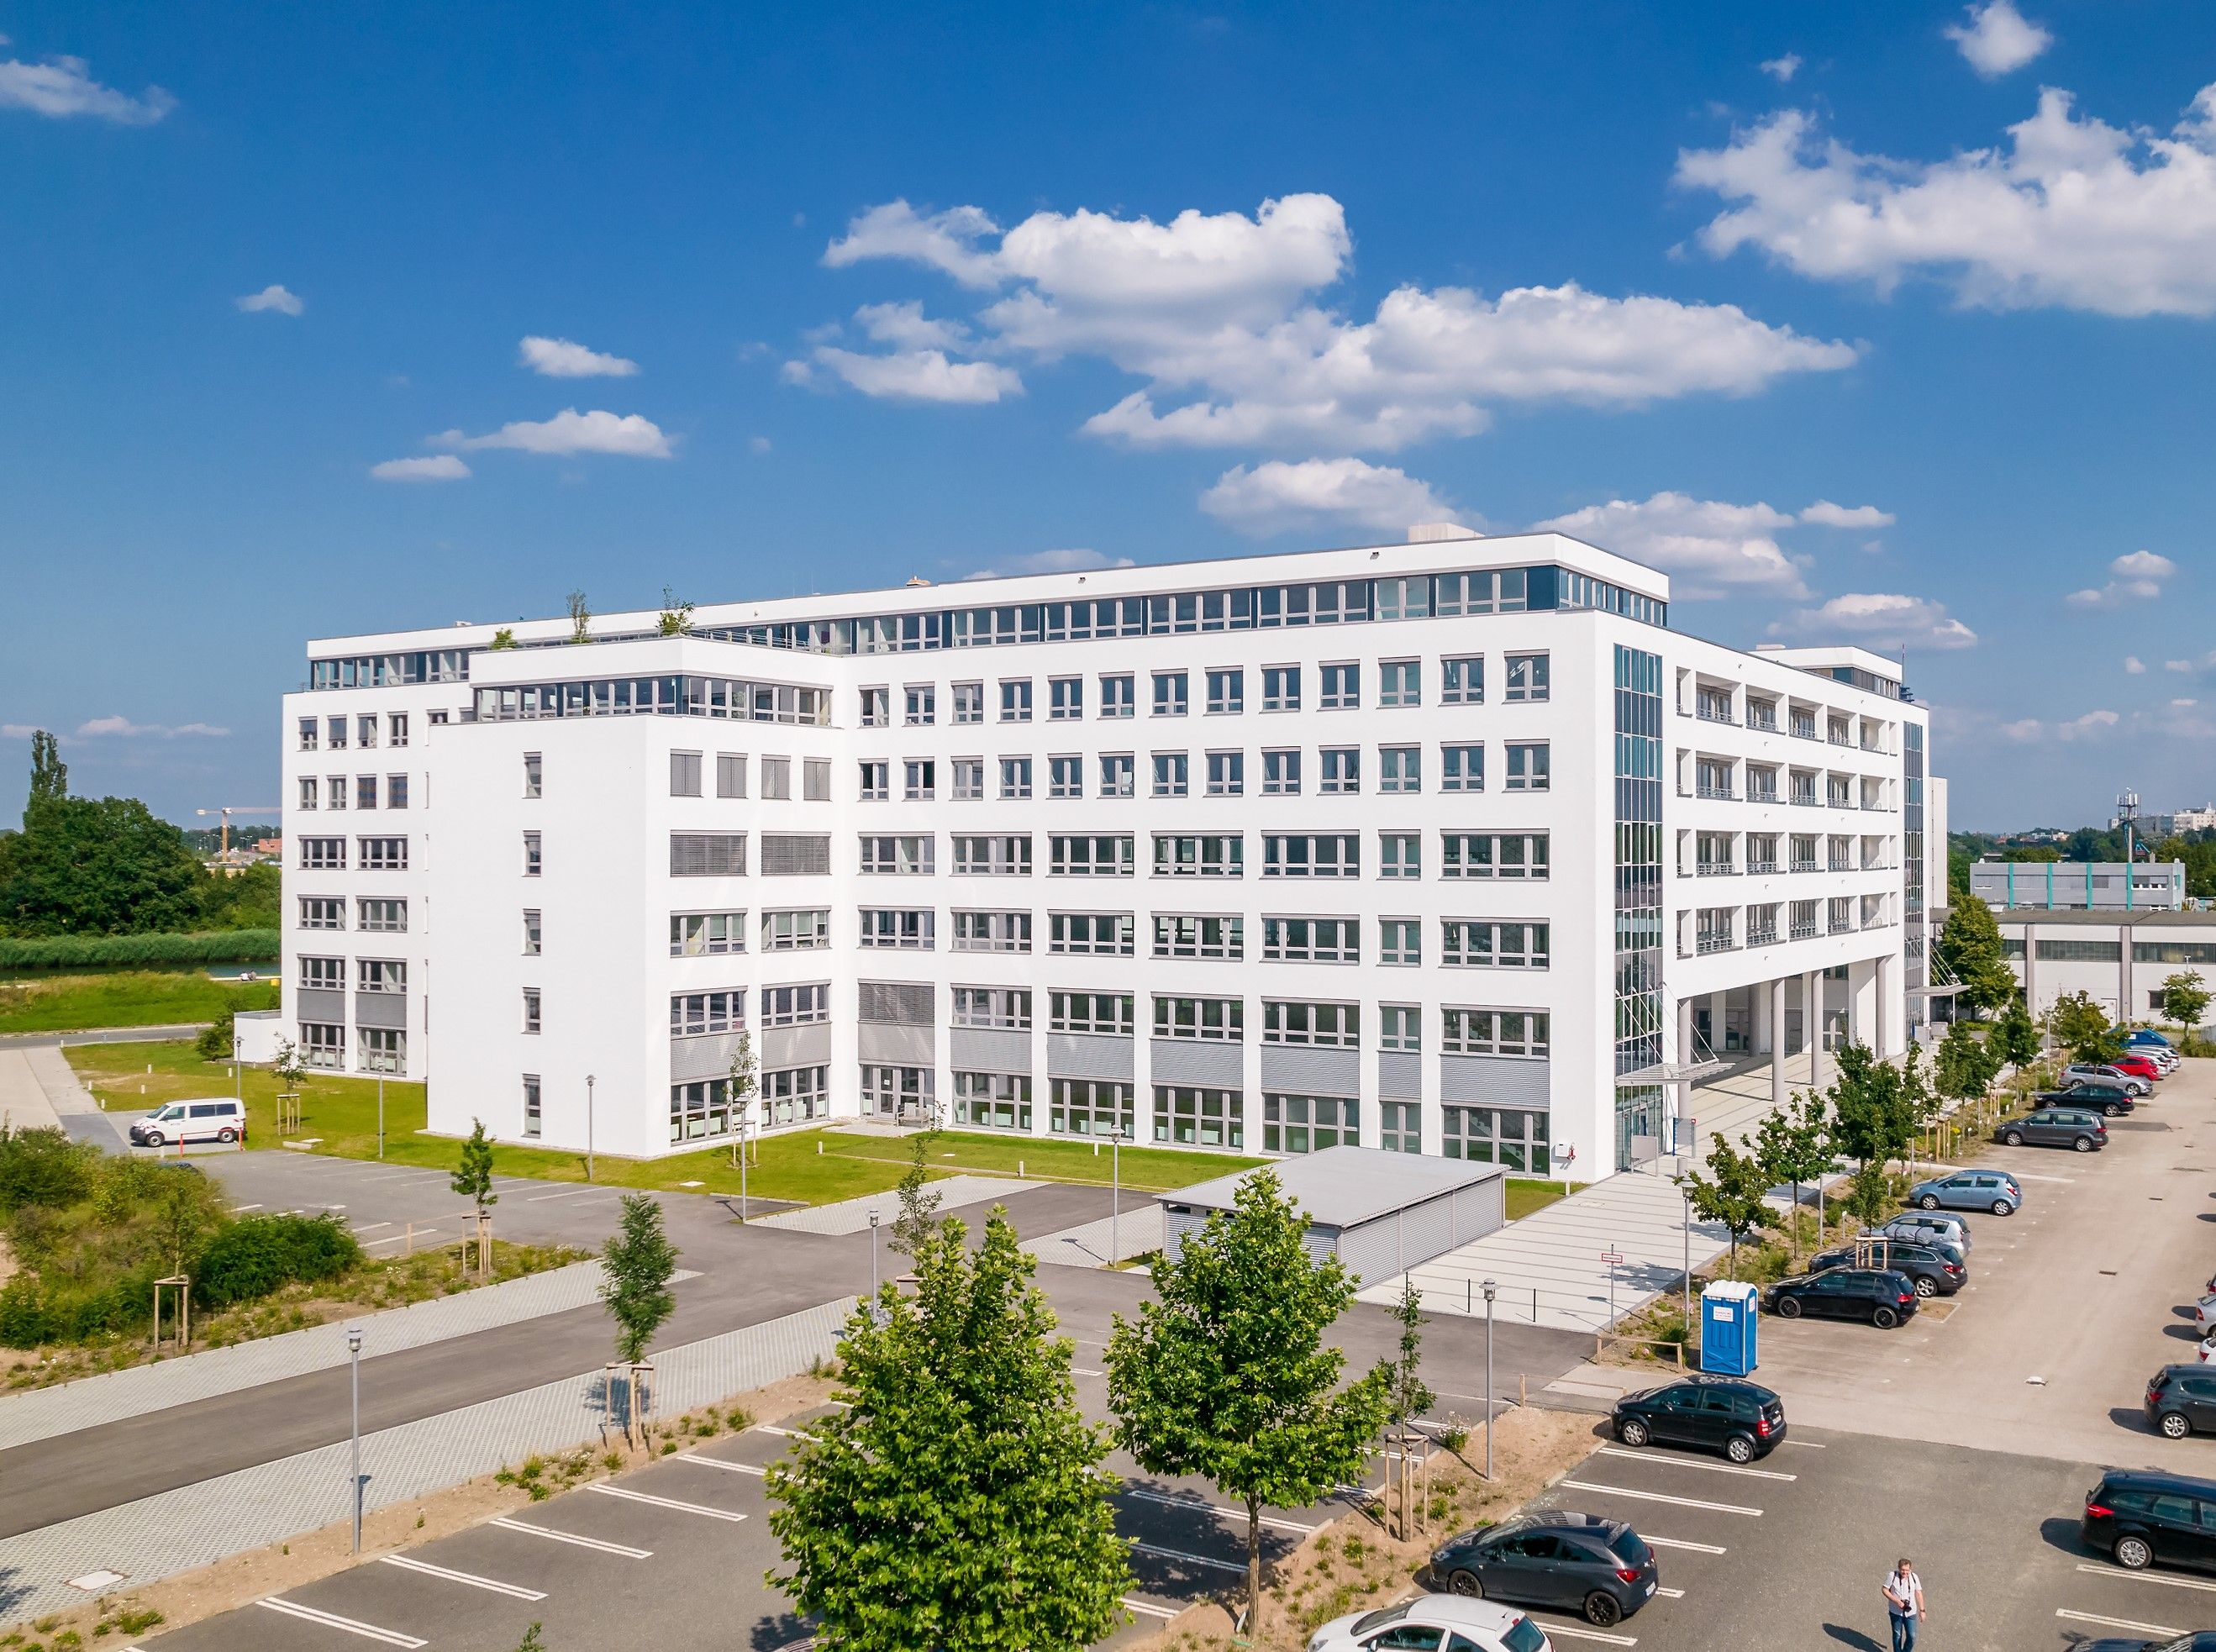 Neues Büro mieten in Nürnberg / Fürth - Dritter Bauabschnitt im Main Donau Park